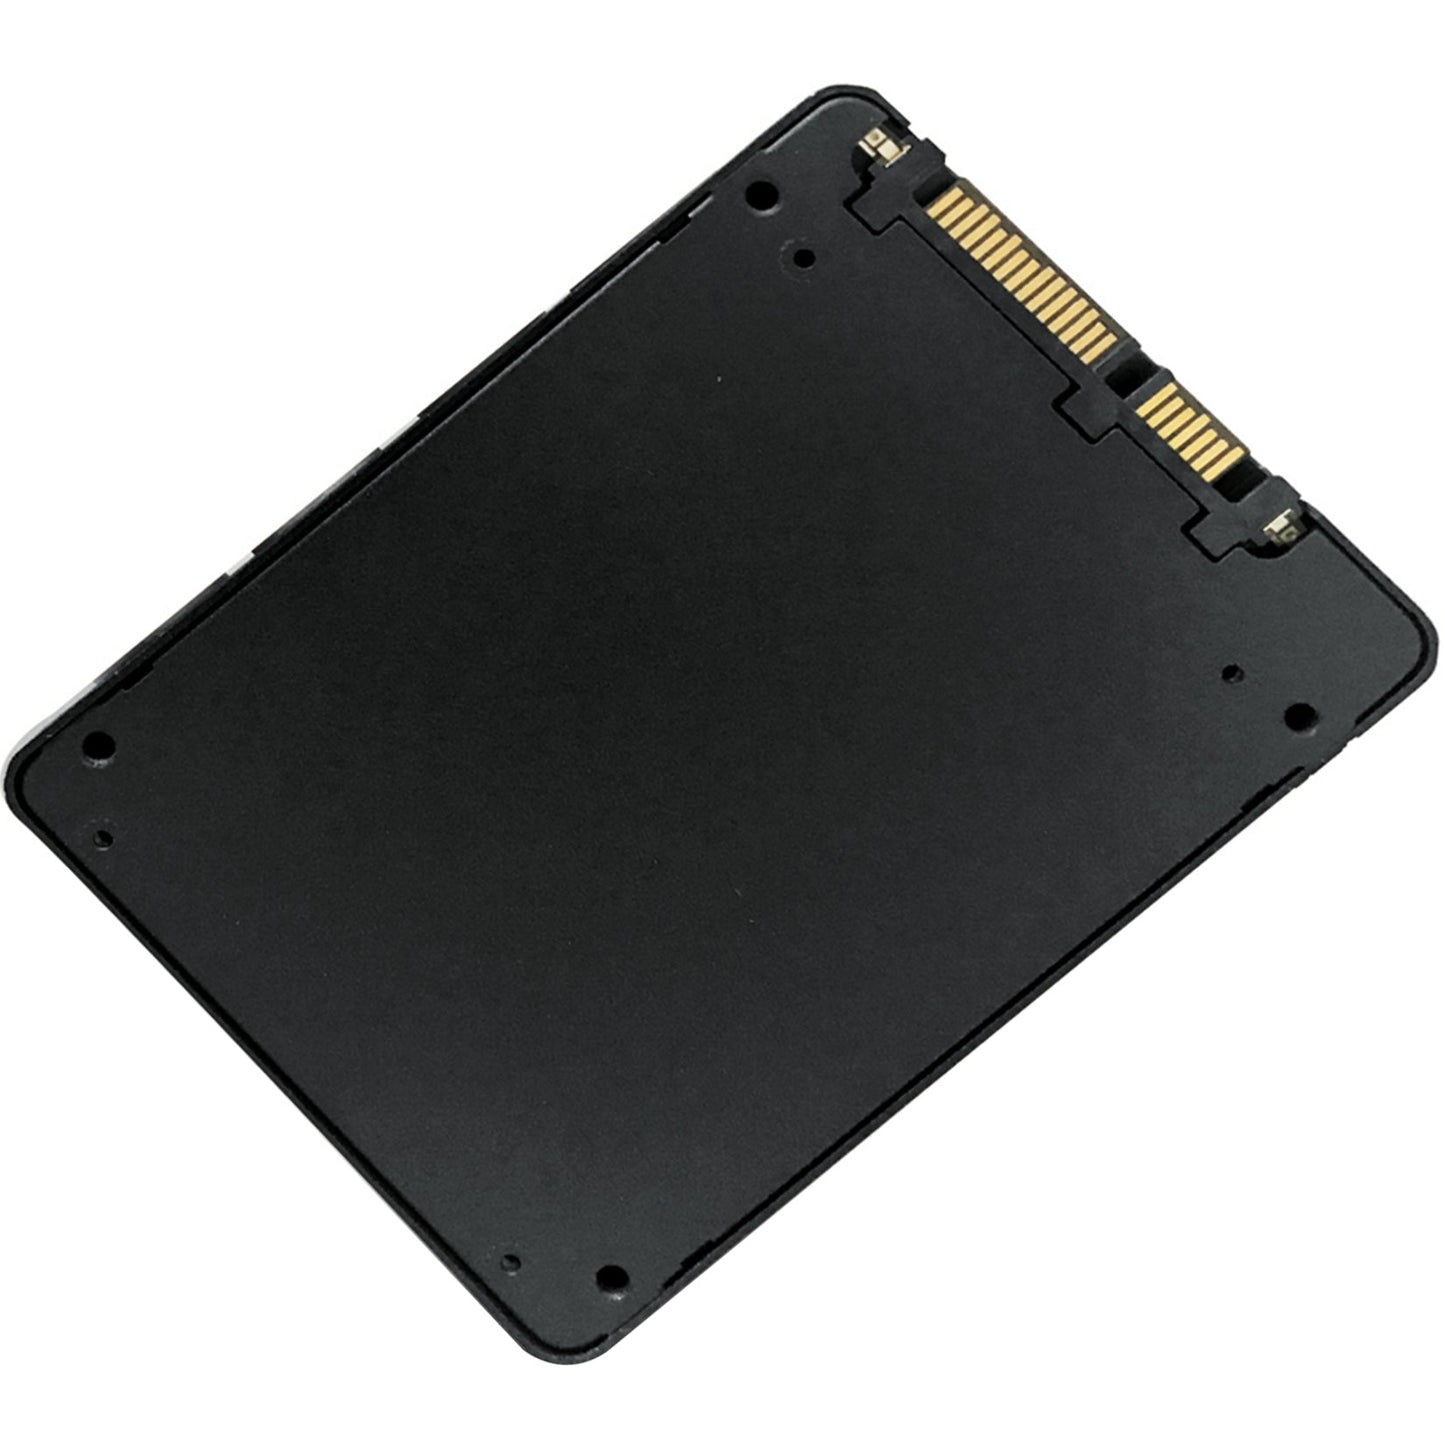 Hyundai 480GB SATA 3D TLC 2.5" Internal PC SSD Advanced 3D NAND Flash Up to 550/470 MB/s